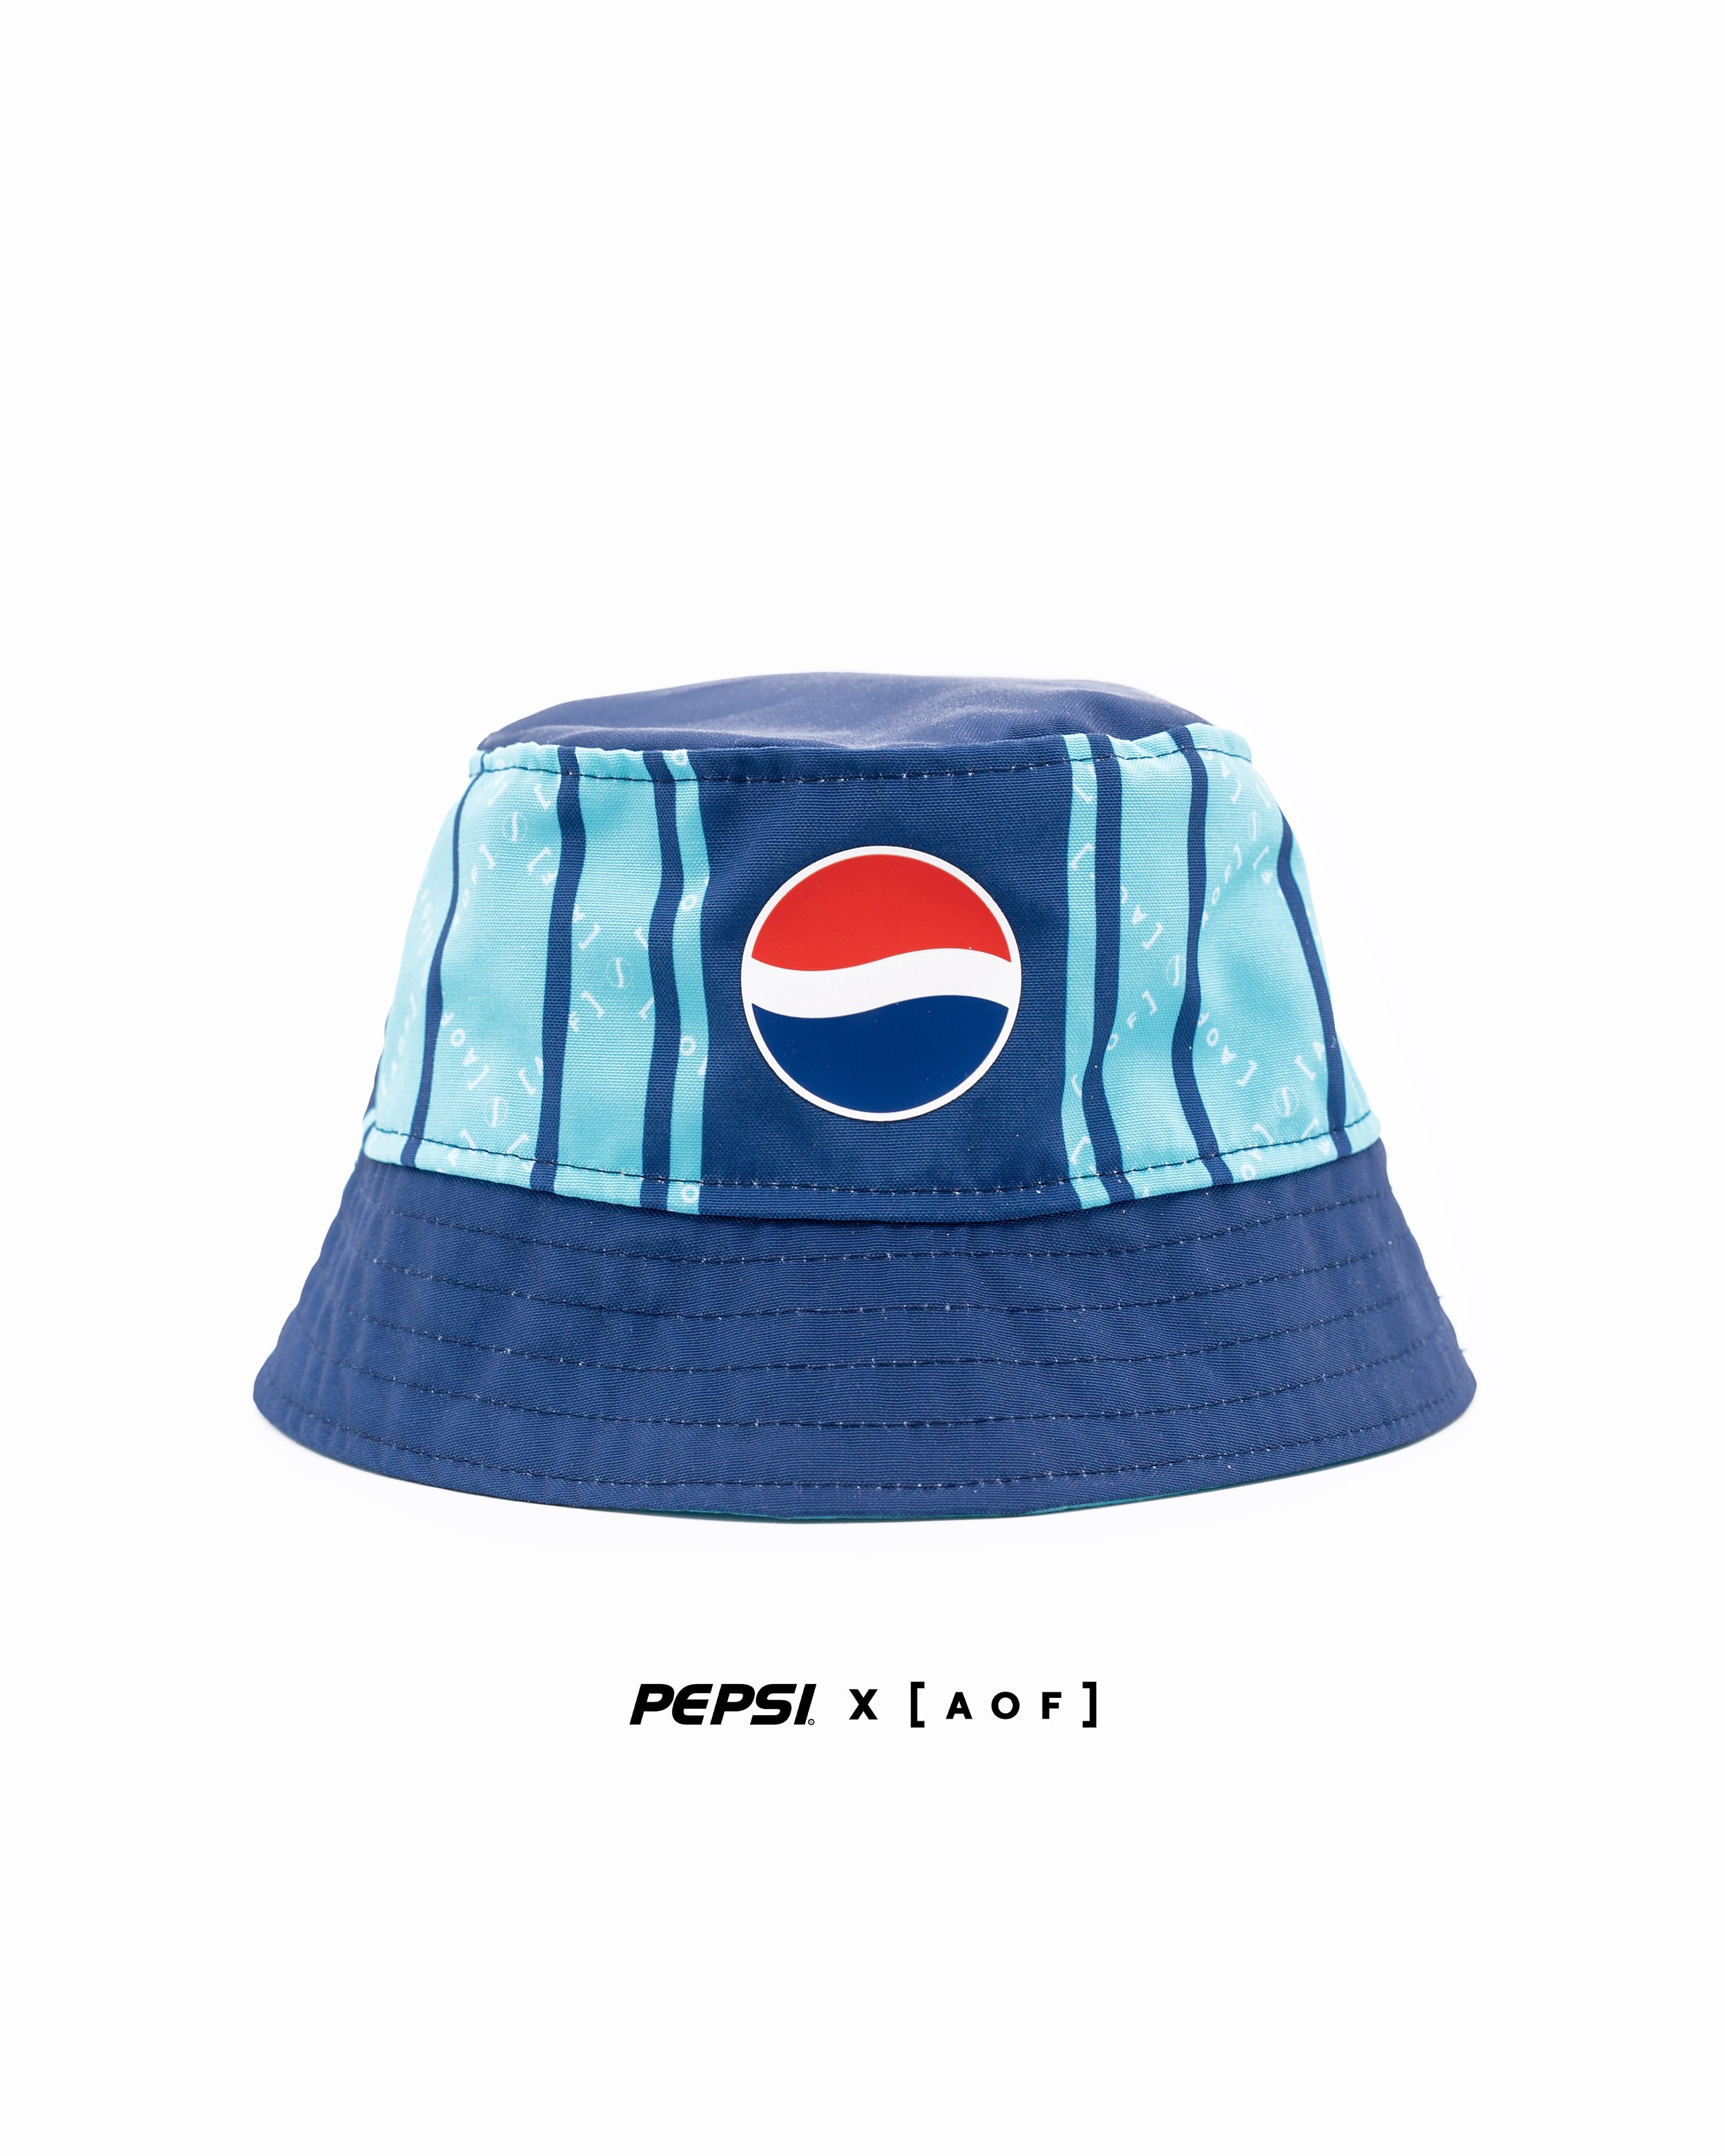 Pepsi X AOF_ Bucket Hat_£25.00_www.art-of-football.com.jpg